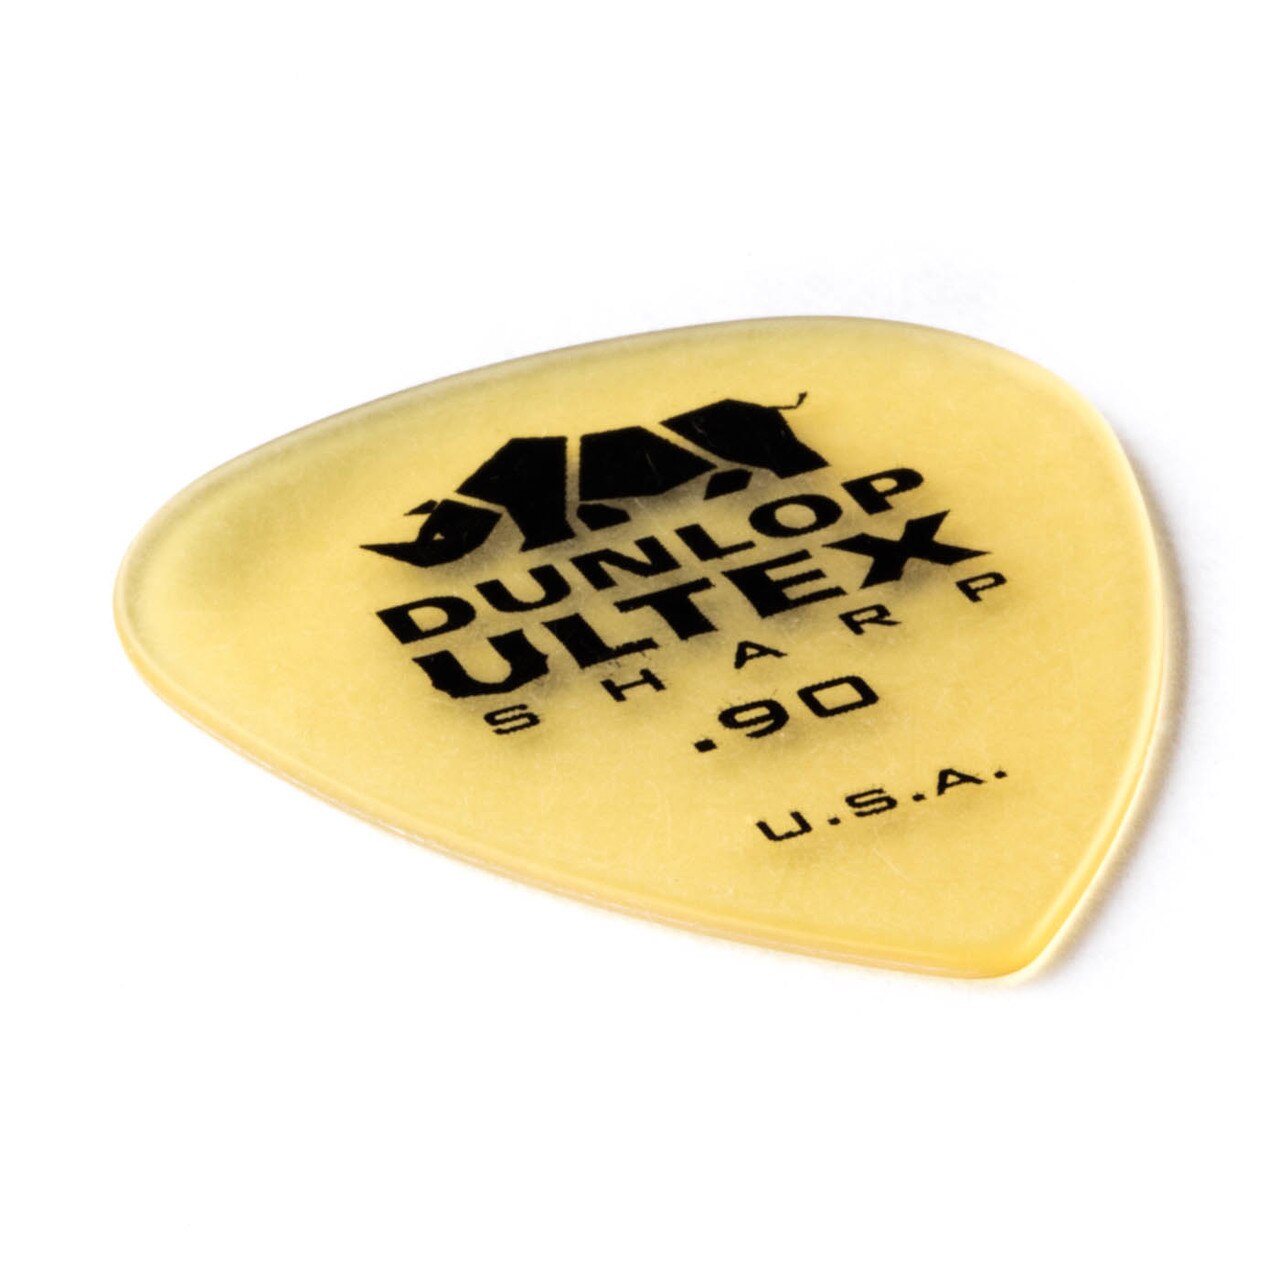 Jim Dunlop Ultex Sharp 433 0.90mm - Guitar pick - Variation 1